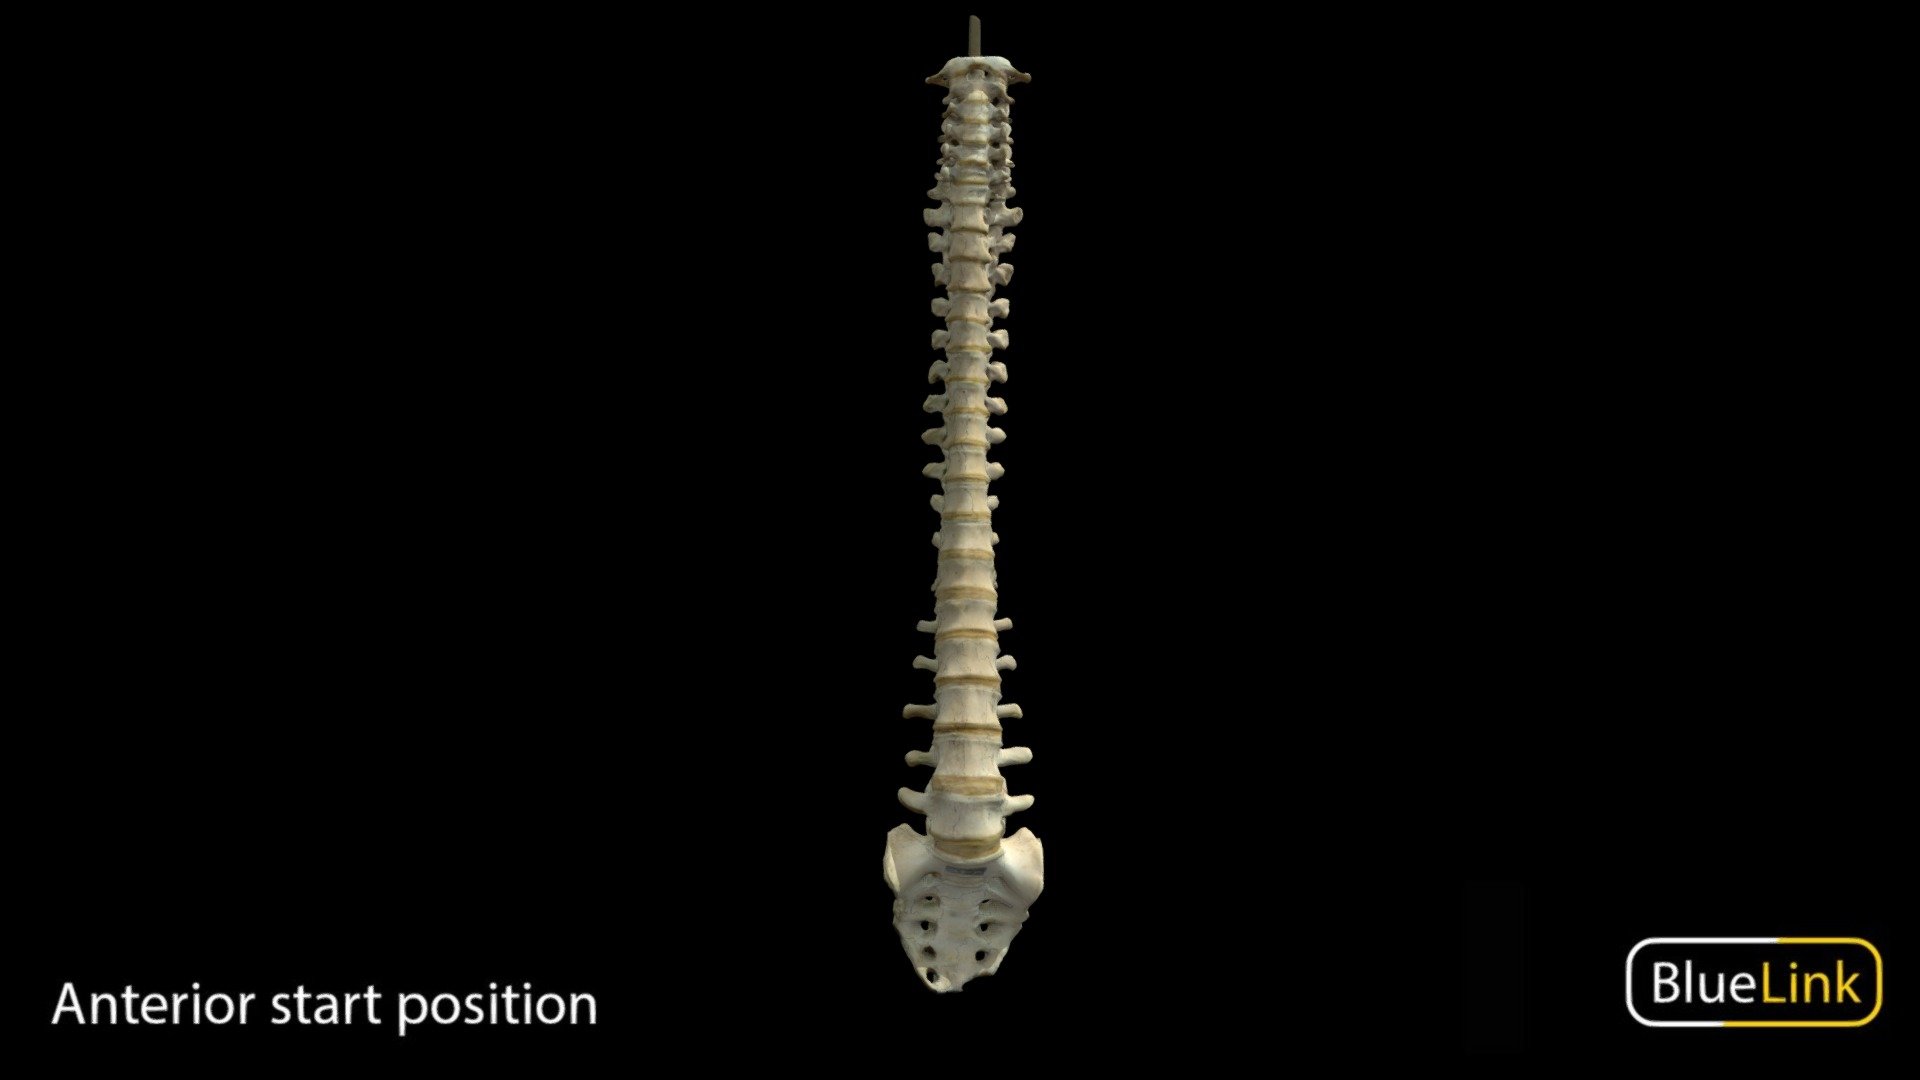 Spinal Column